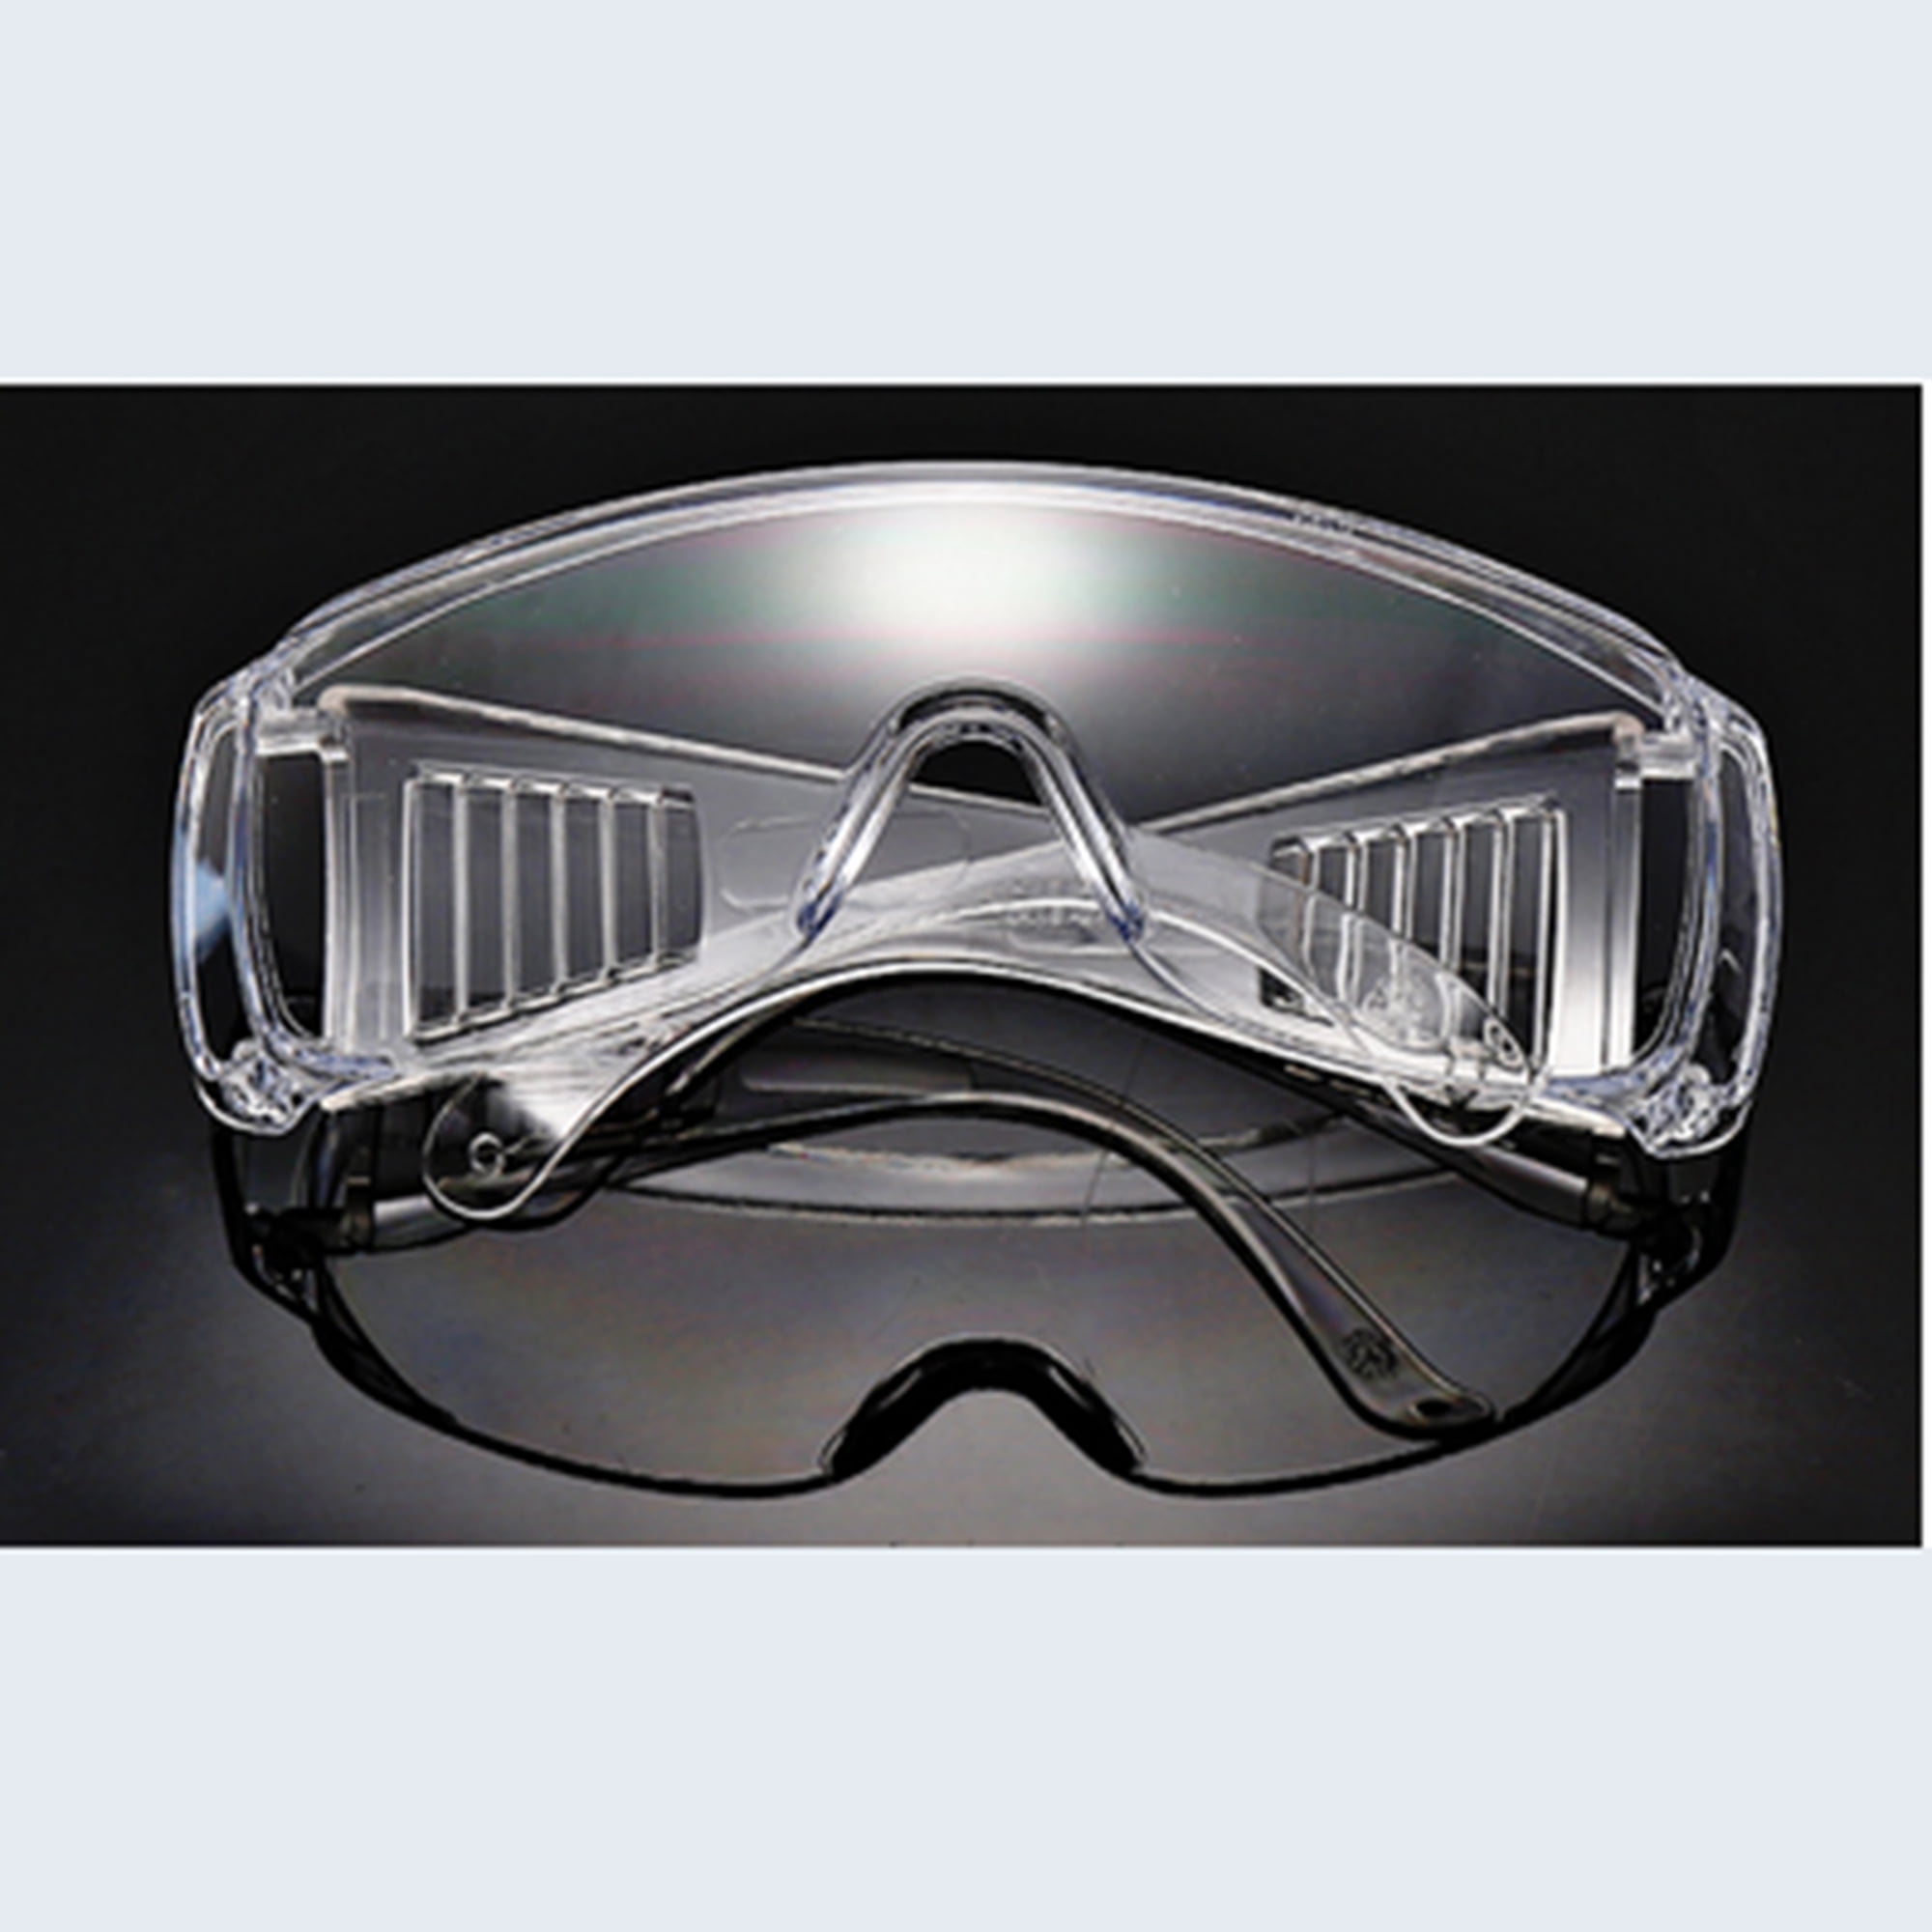 Anti-fog anti-dust impactimpact splash proof protective safety goggles glasses 